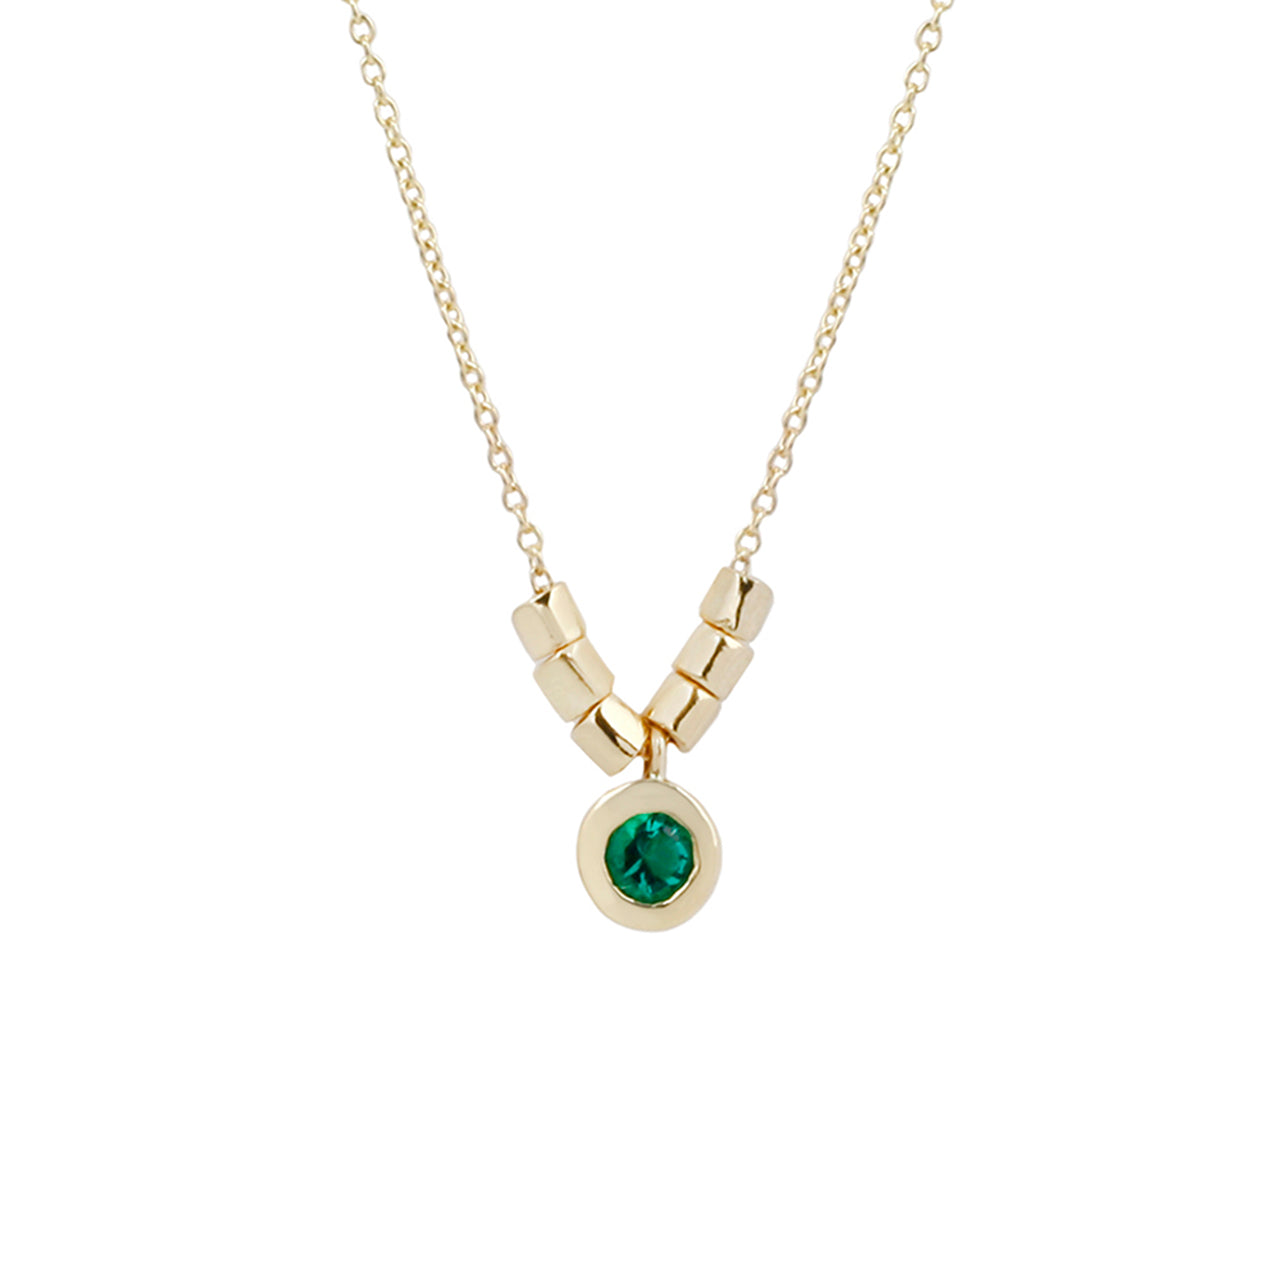 Emerald pebble necklace